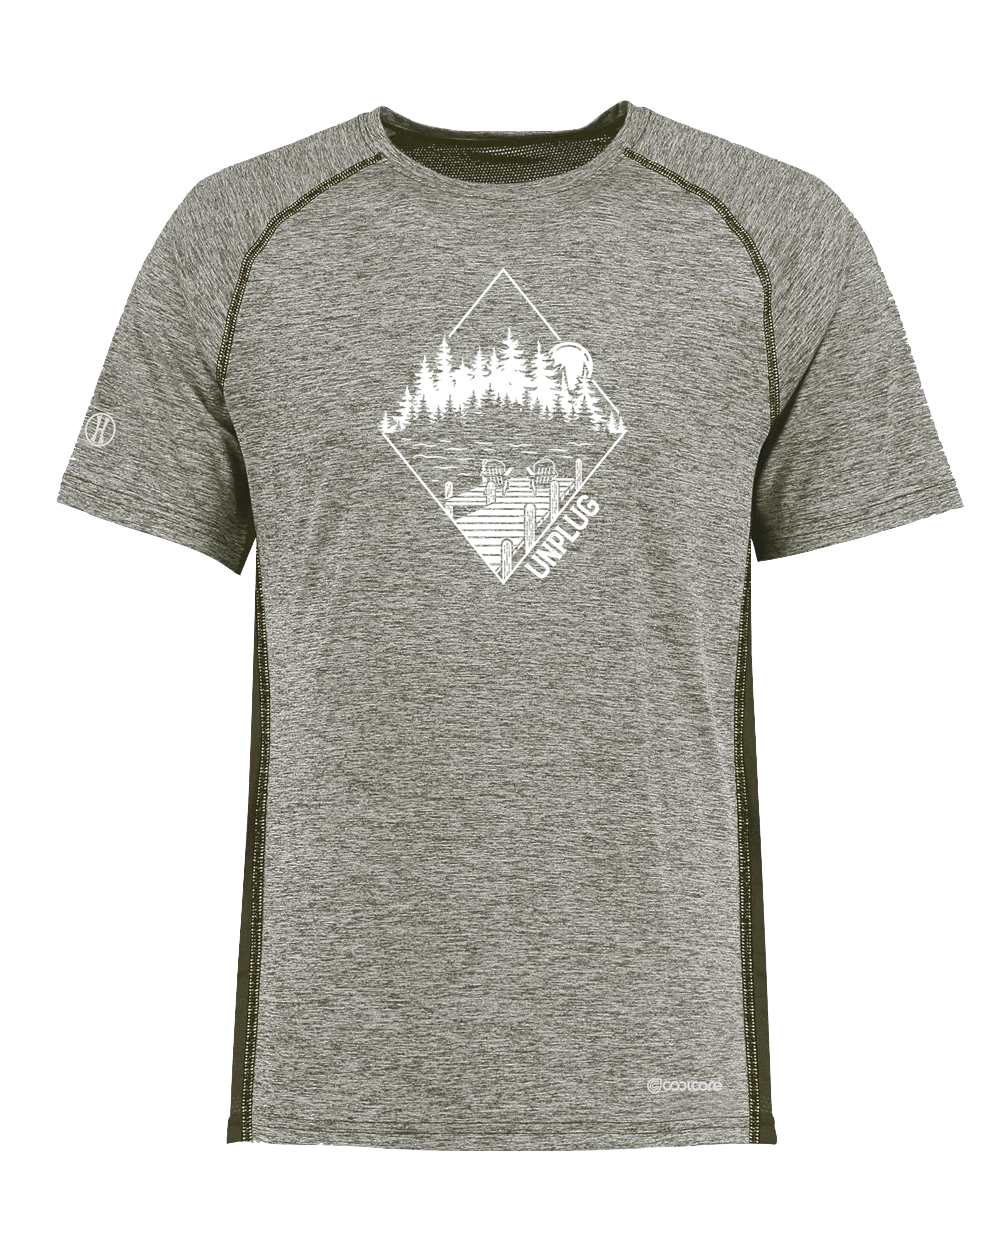 LAKE LIFE Poly/Elastane High Performance T-Shirt with UPF 50+